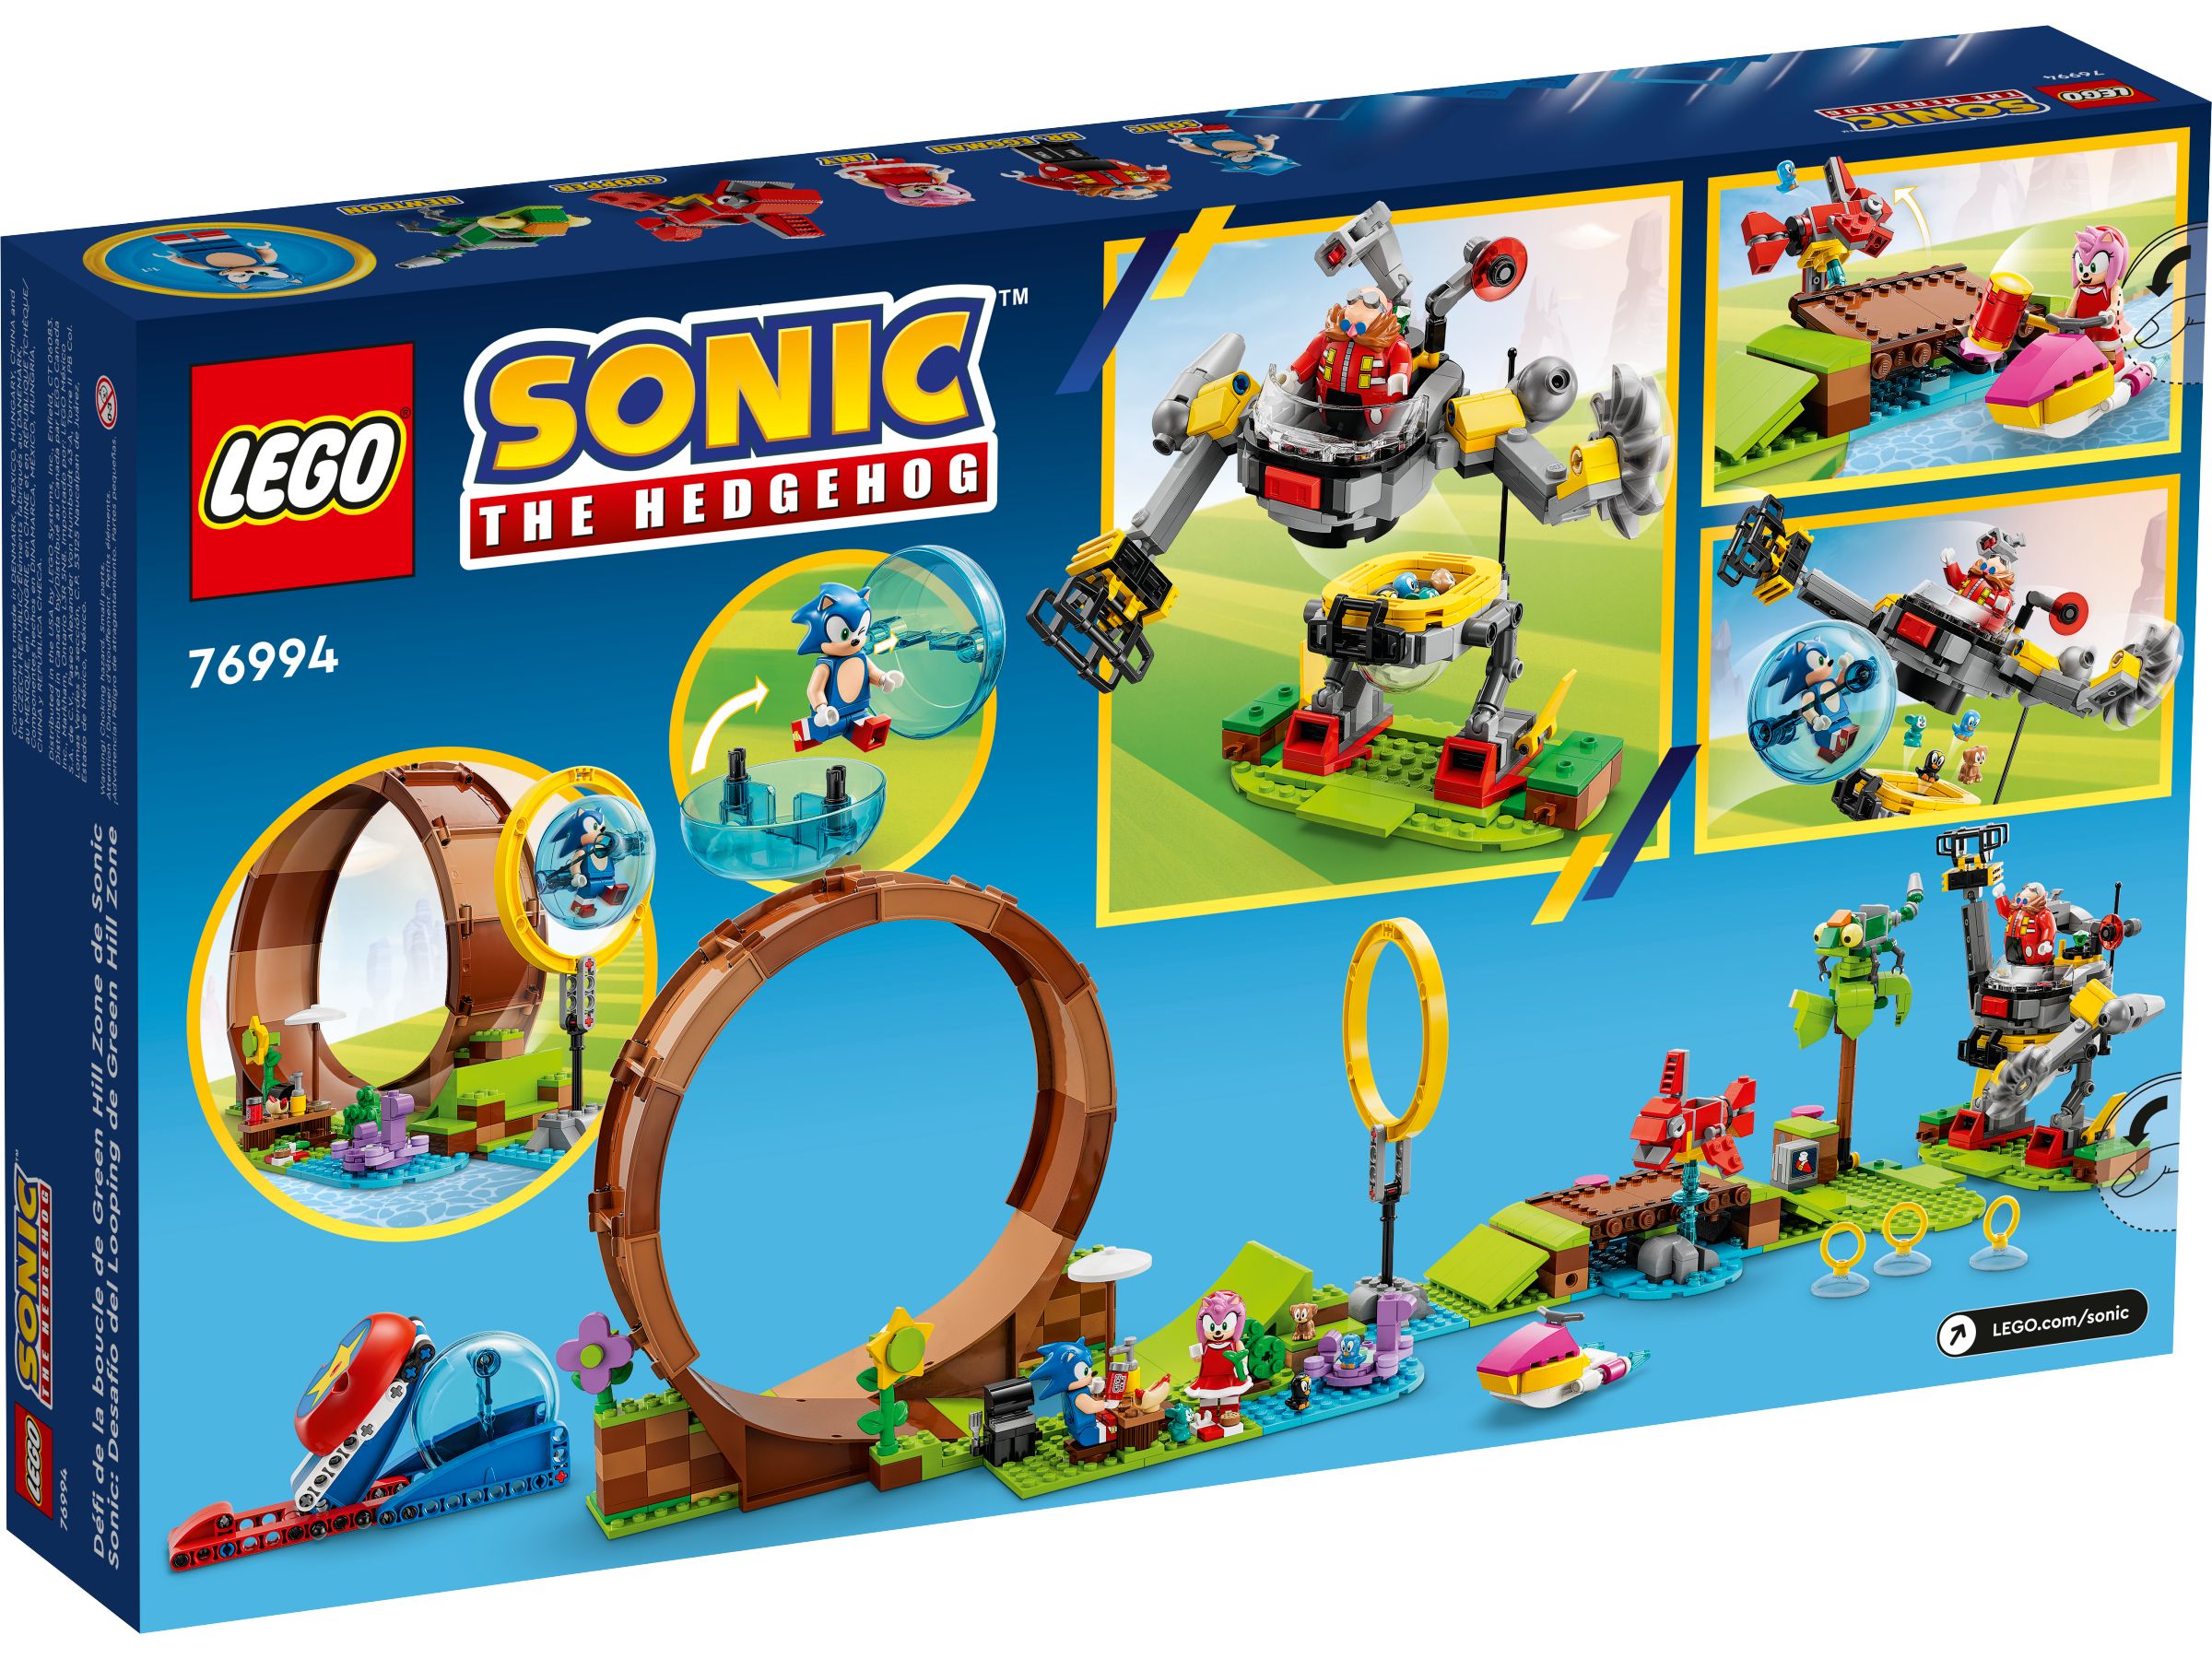 LEGO Sonic the Hedgehog 76994 Sonics Looping-Challenge in der Green Hill Zone LEGO_76994_Box5_v39.jpg